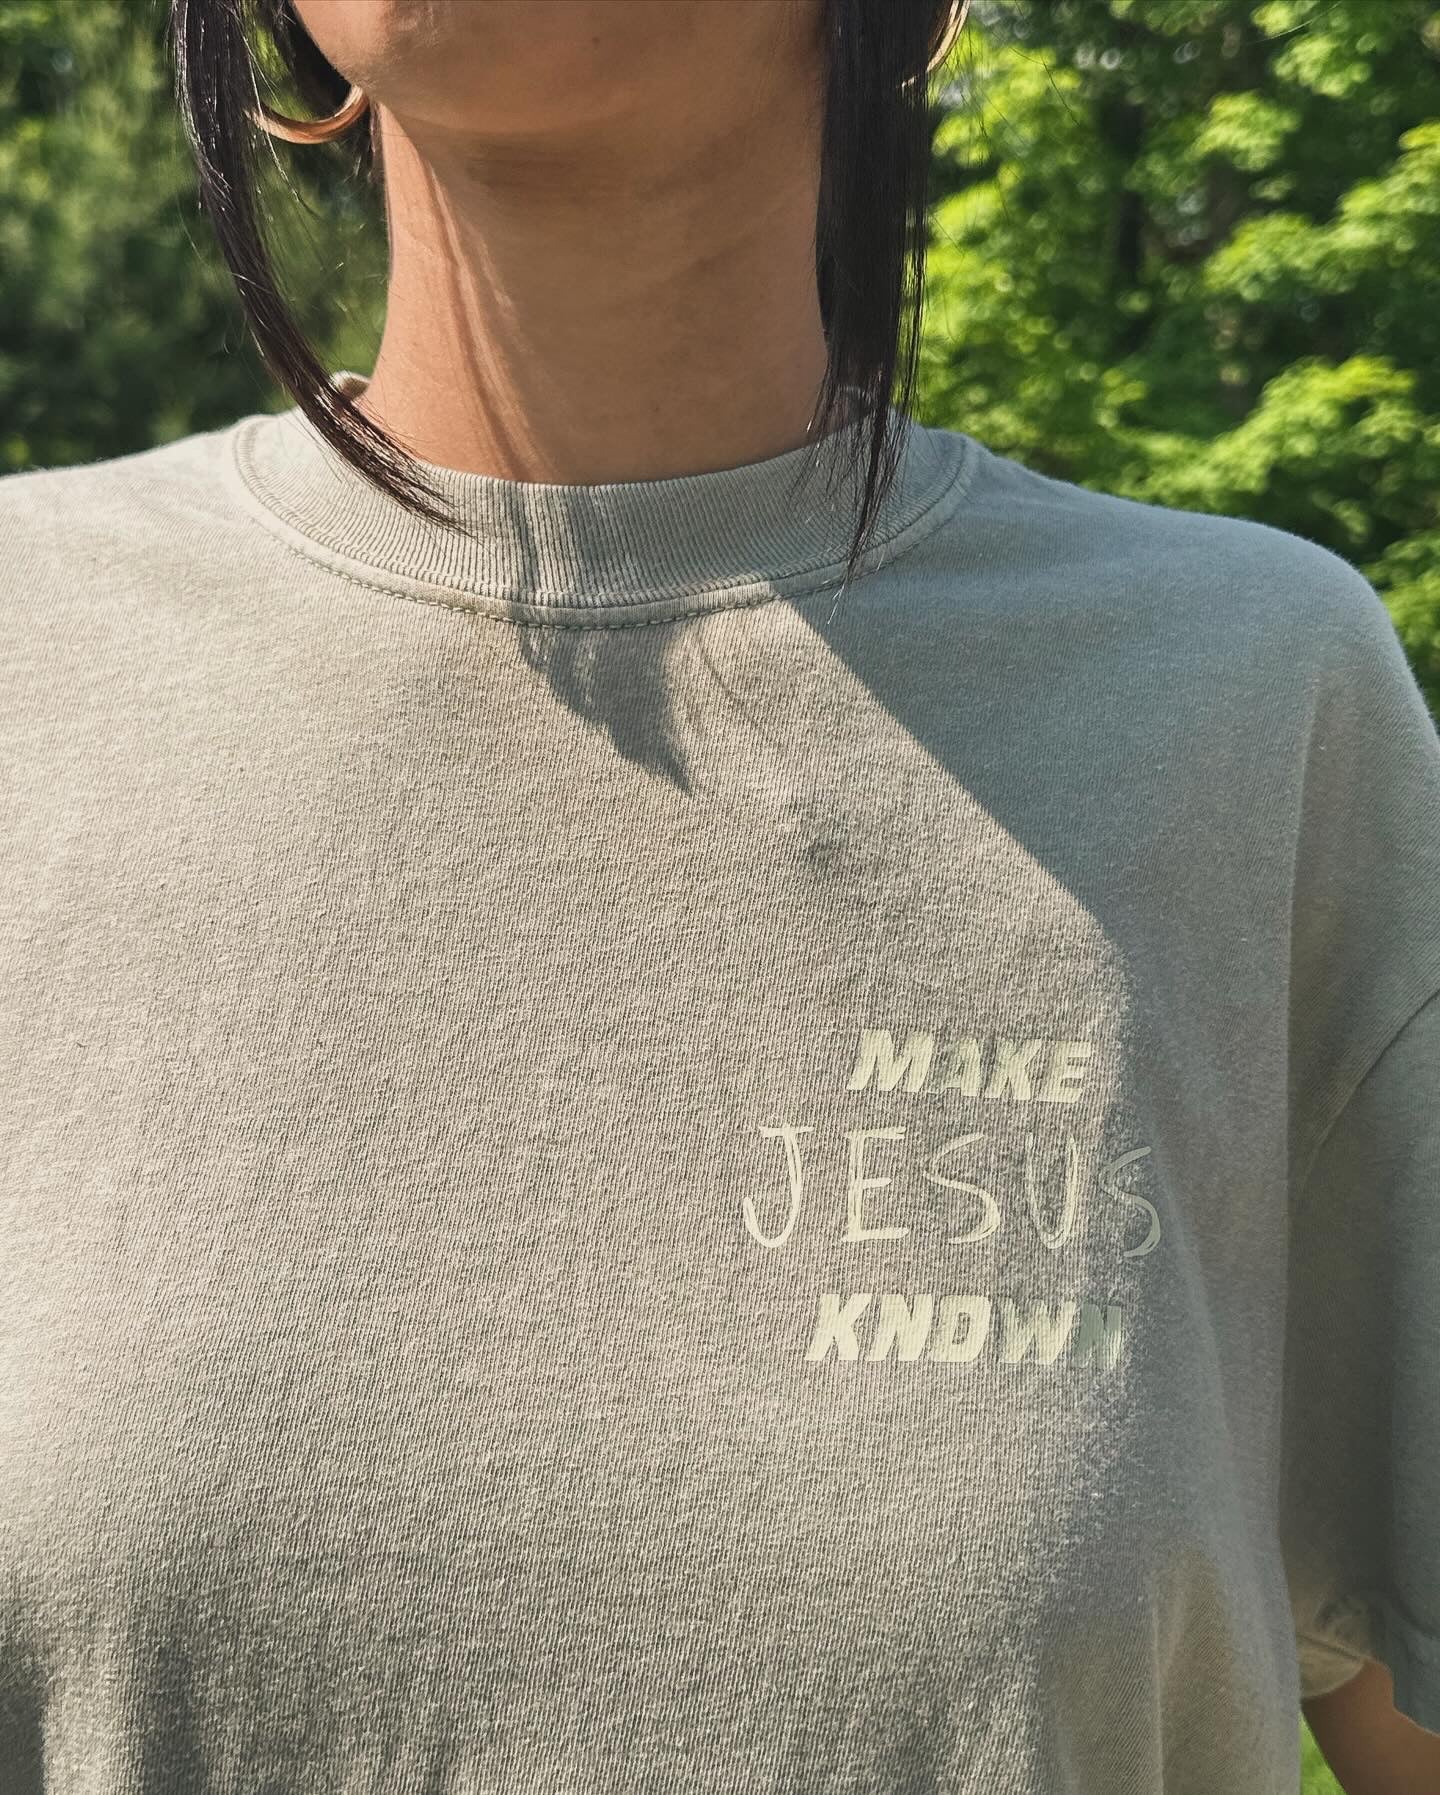 Make Jesus Known T-Shirt